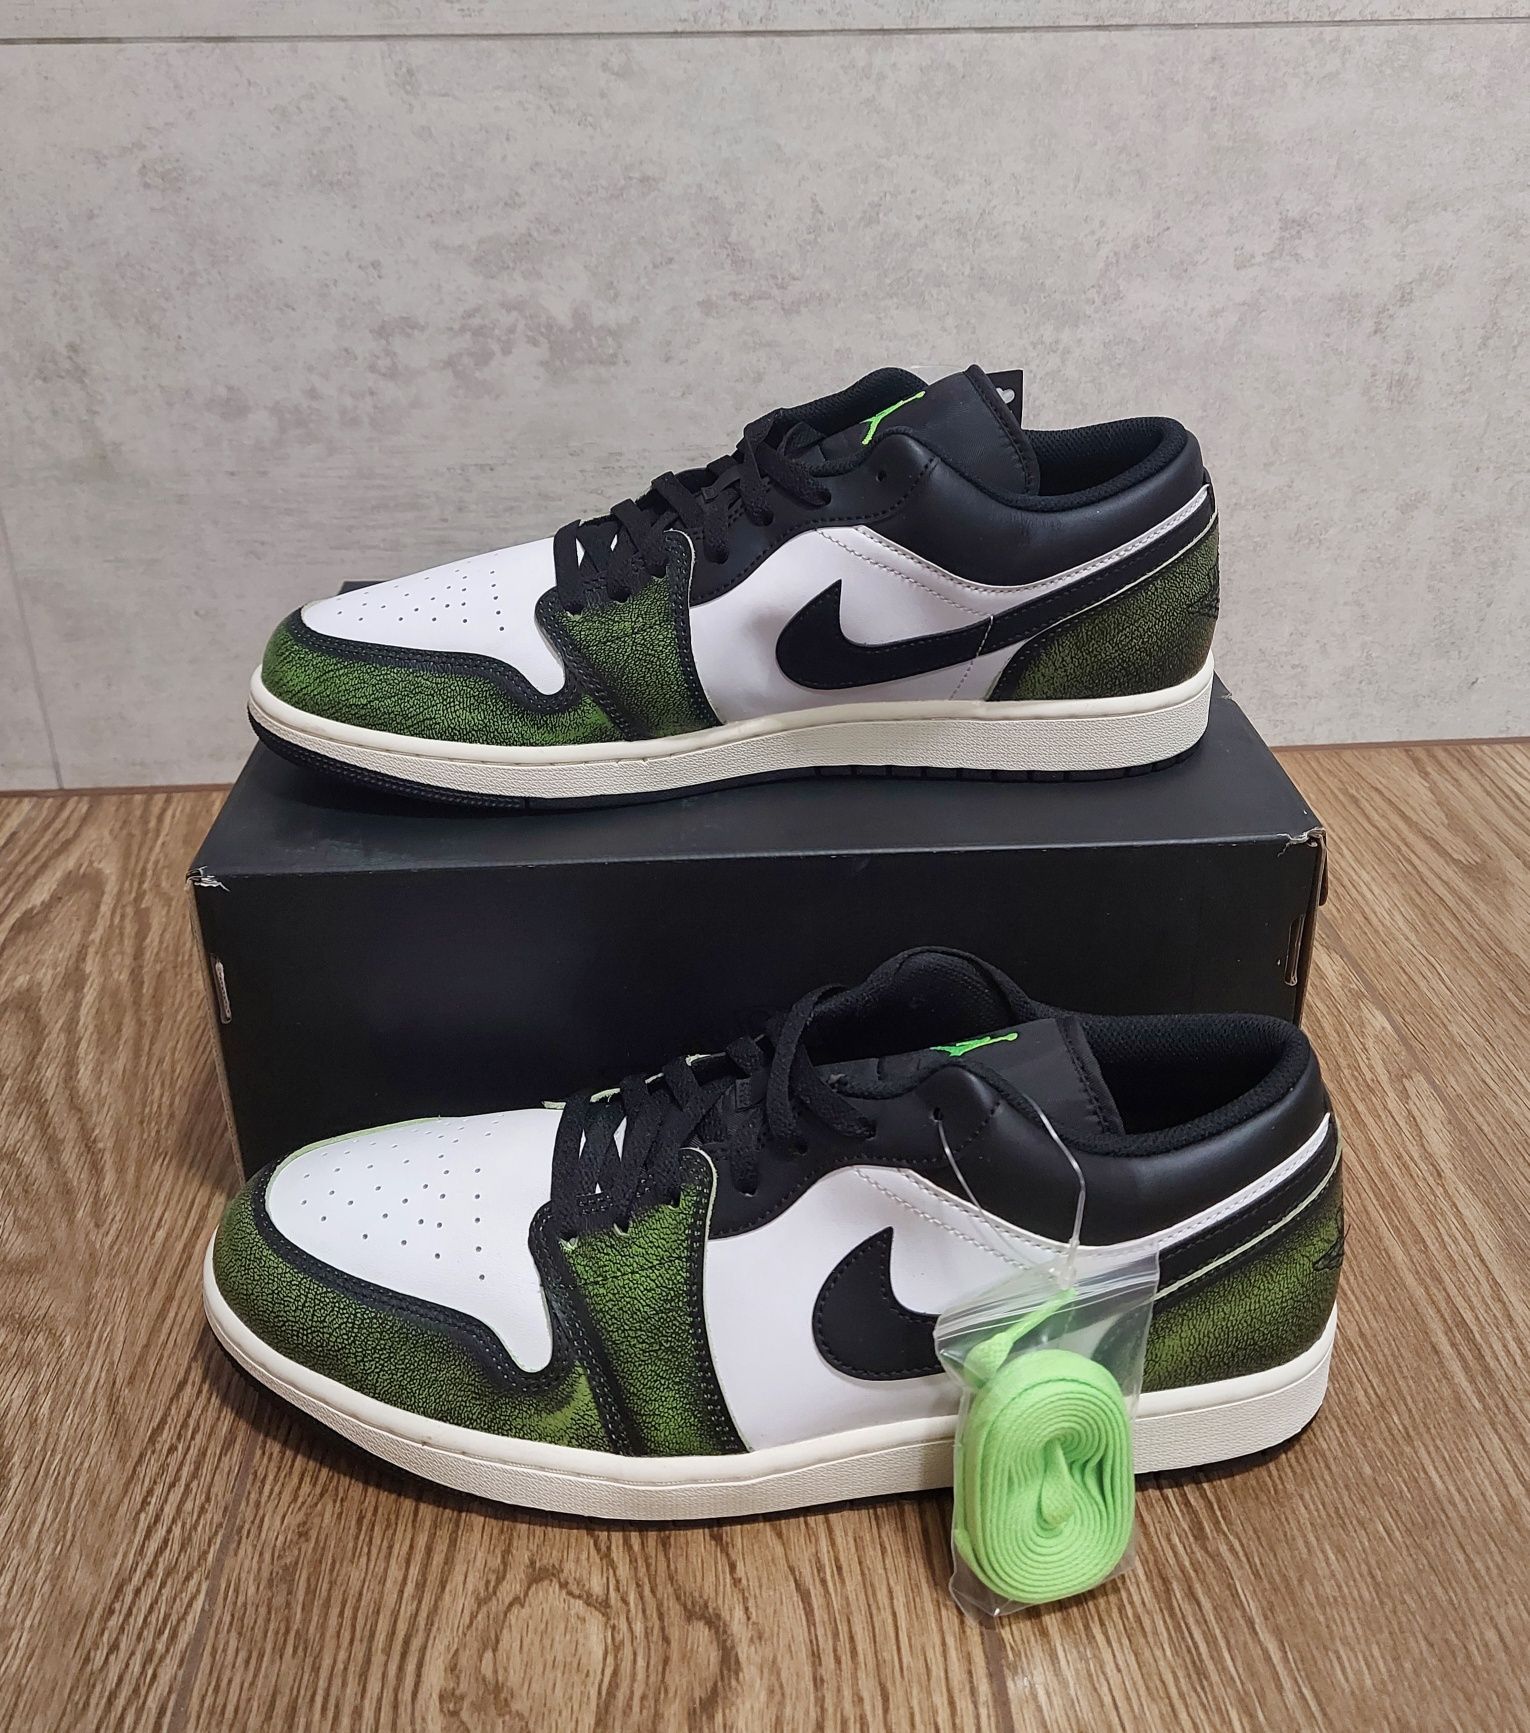 Buty Nike Air Jordan 1 low Electric Green rozmiar 49.5